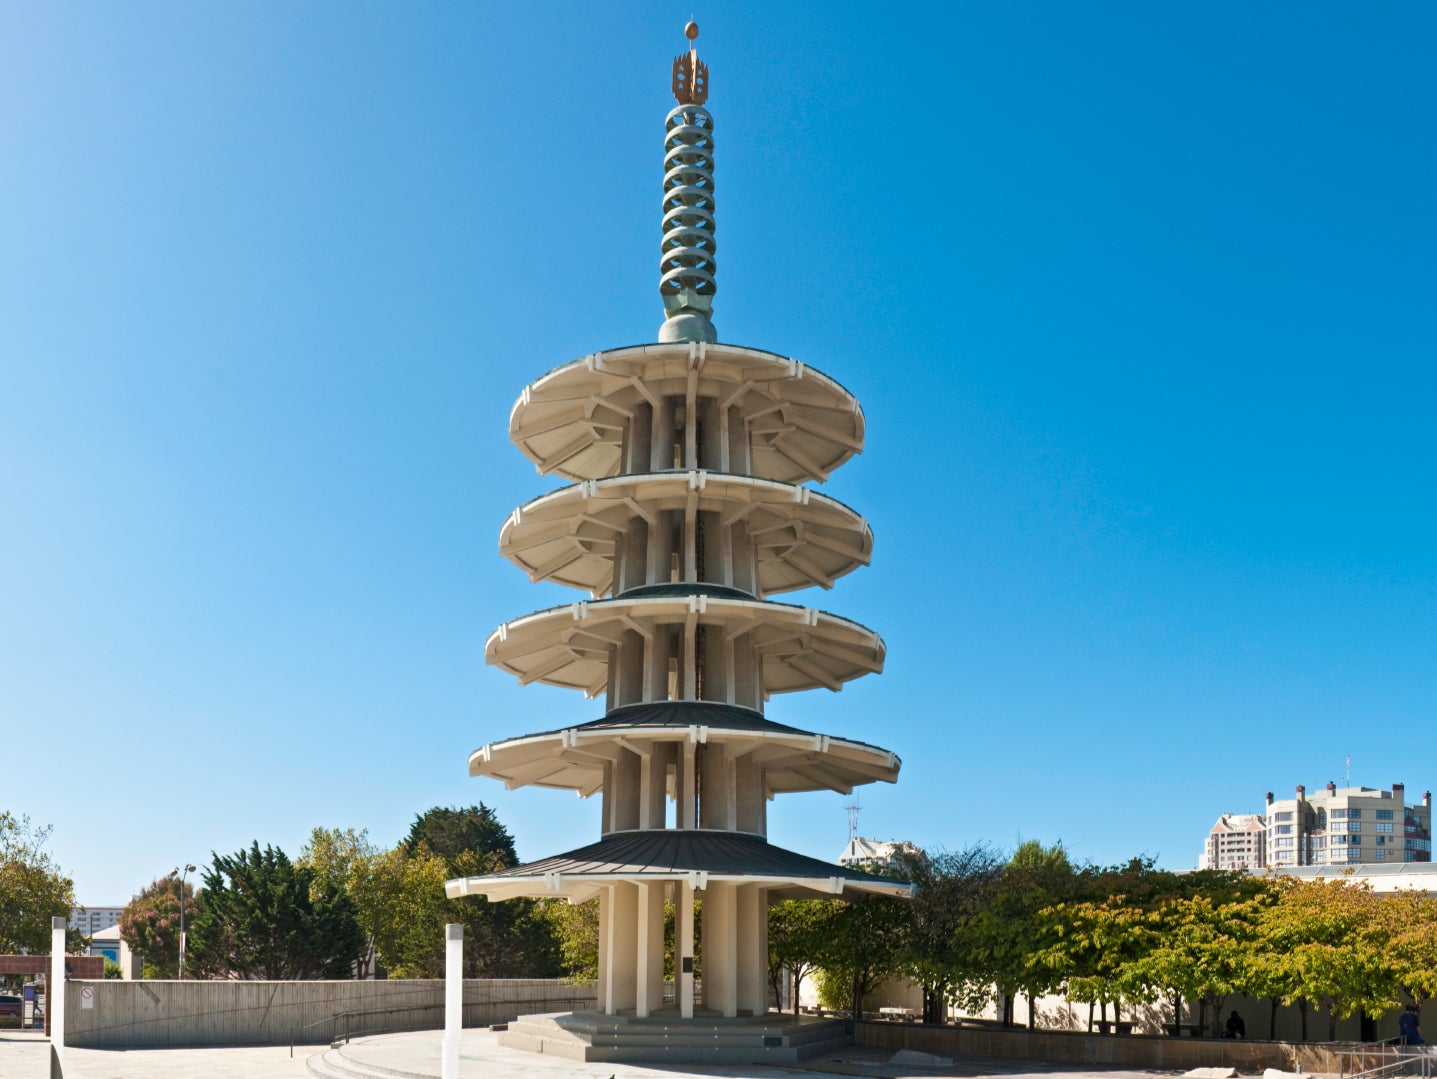 The Peace Pagoda links San Francisco to the city of Osaka in Japan